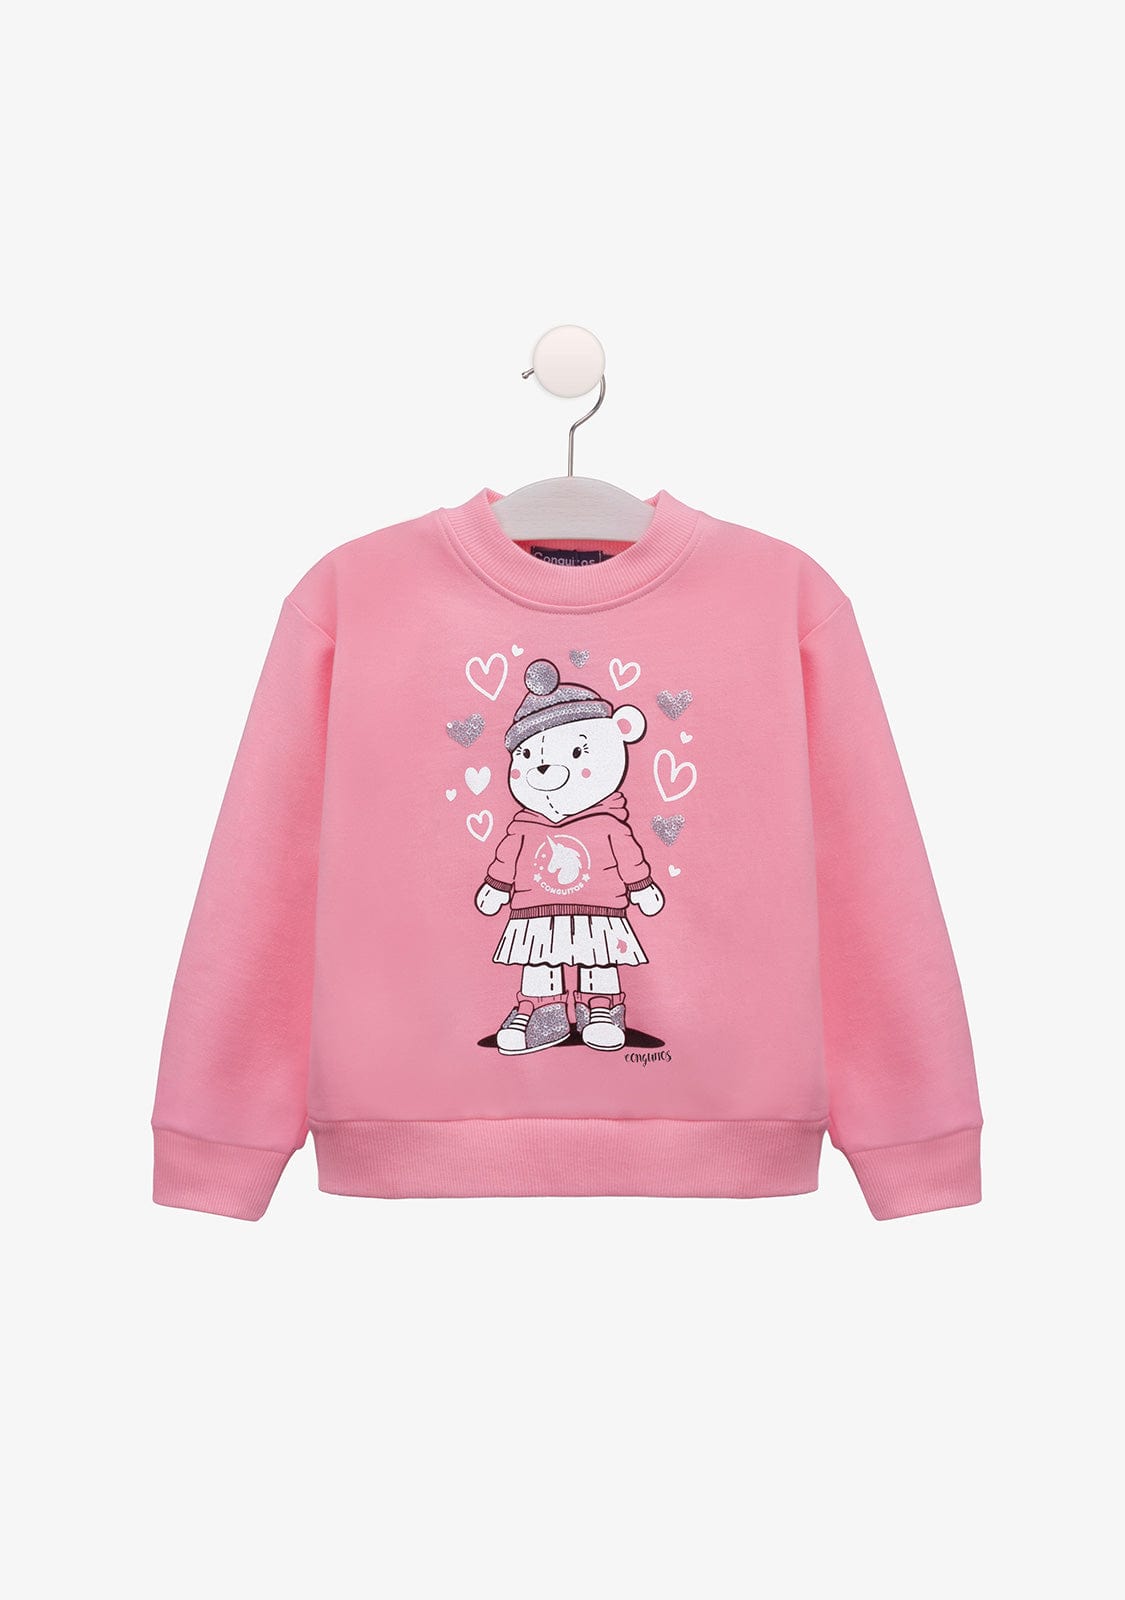 CONGUITOS TEXTIL Clothing Girl's Teddy Bear Sweatshirt